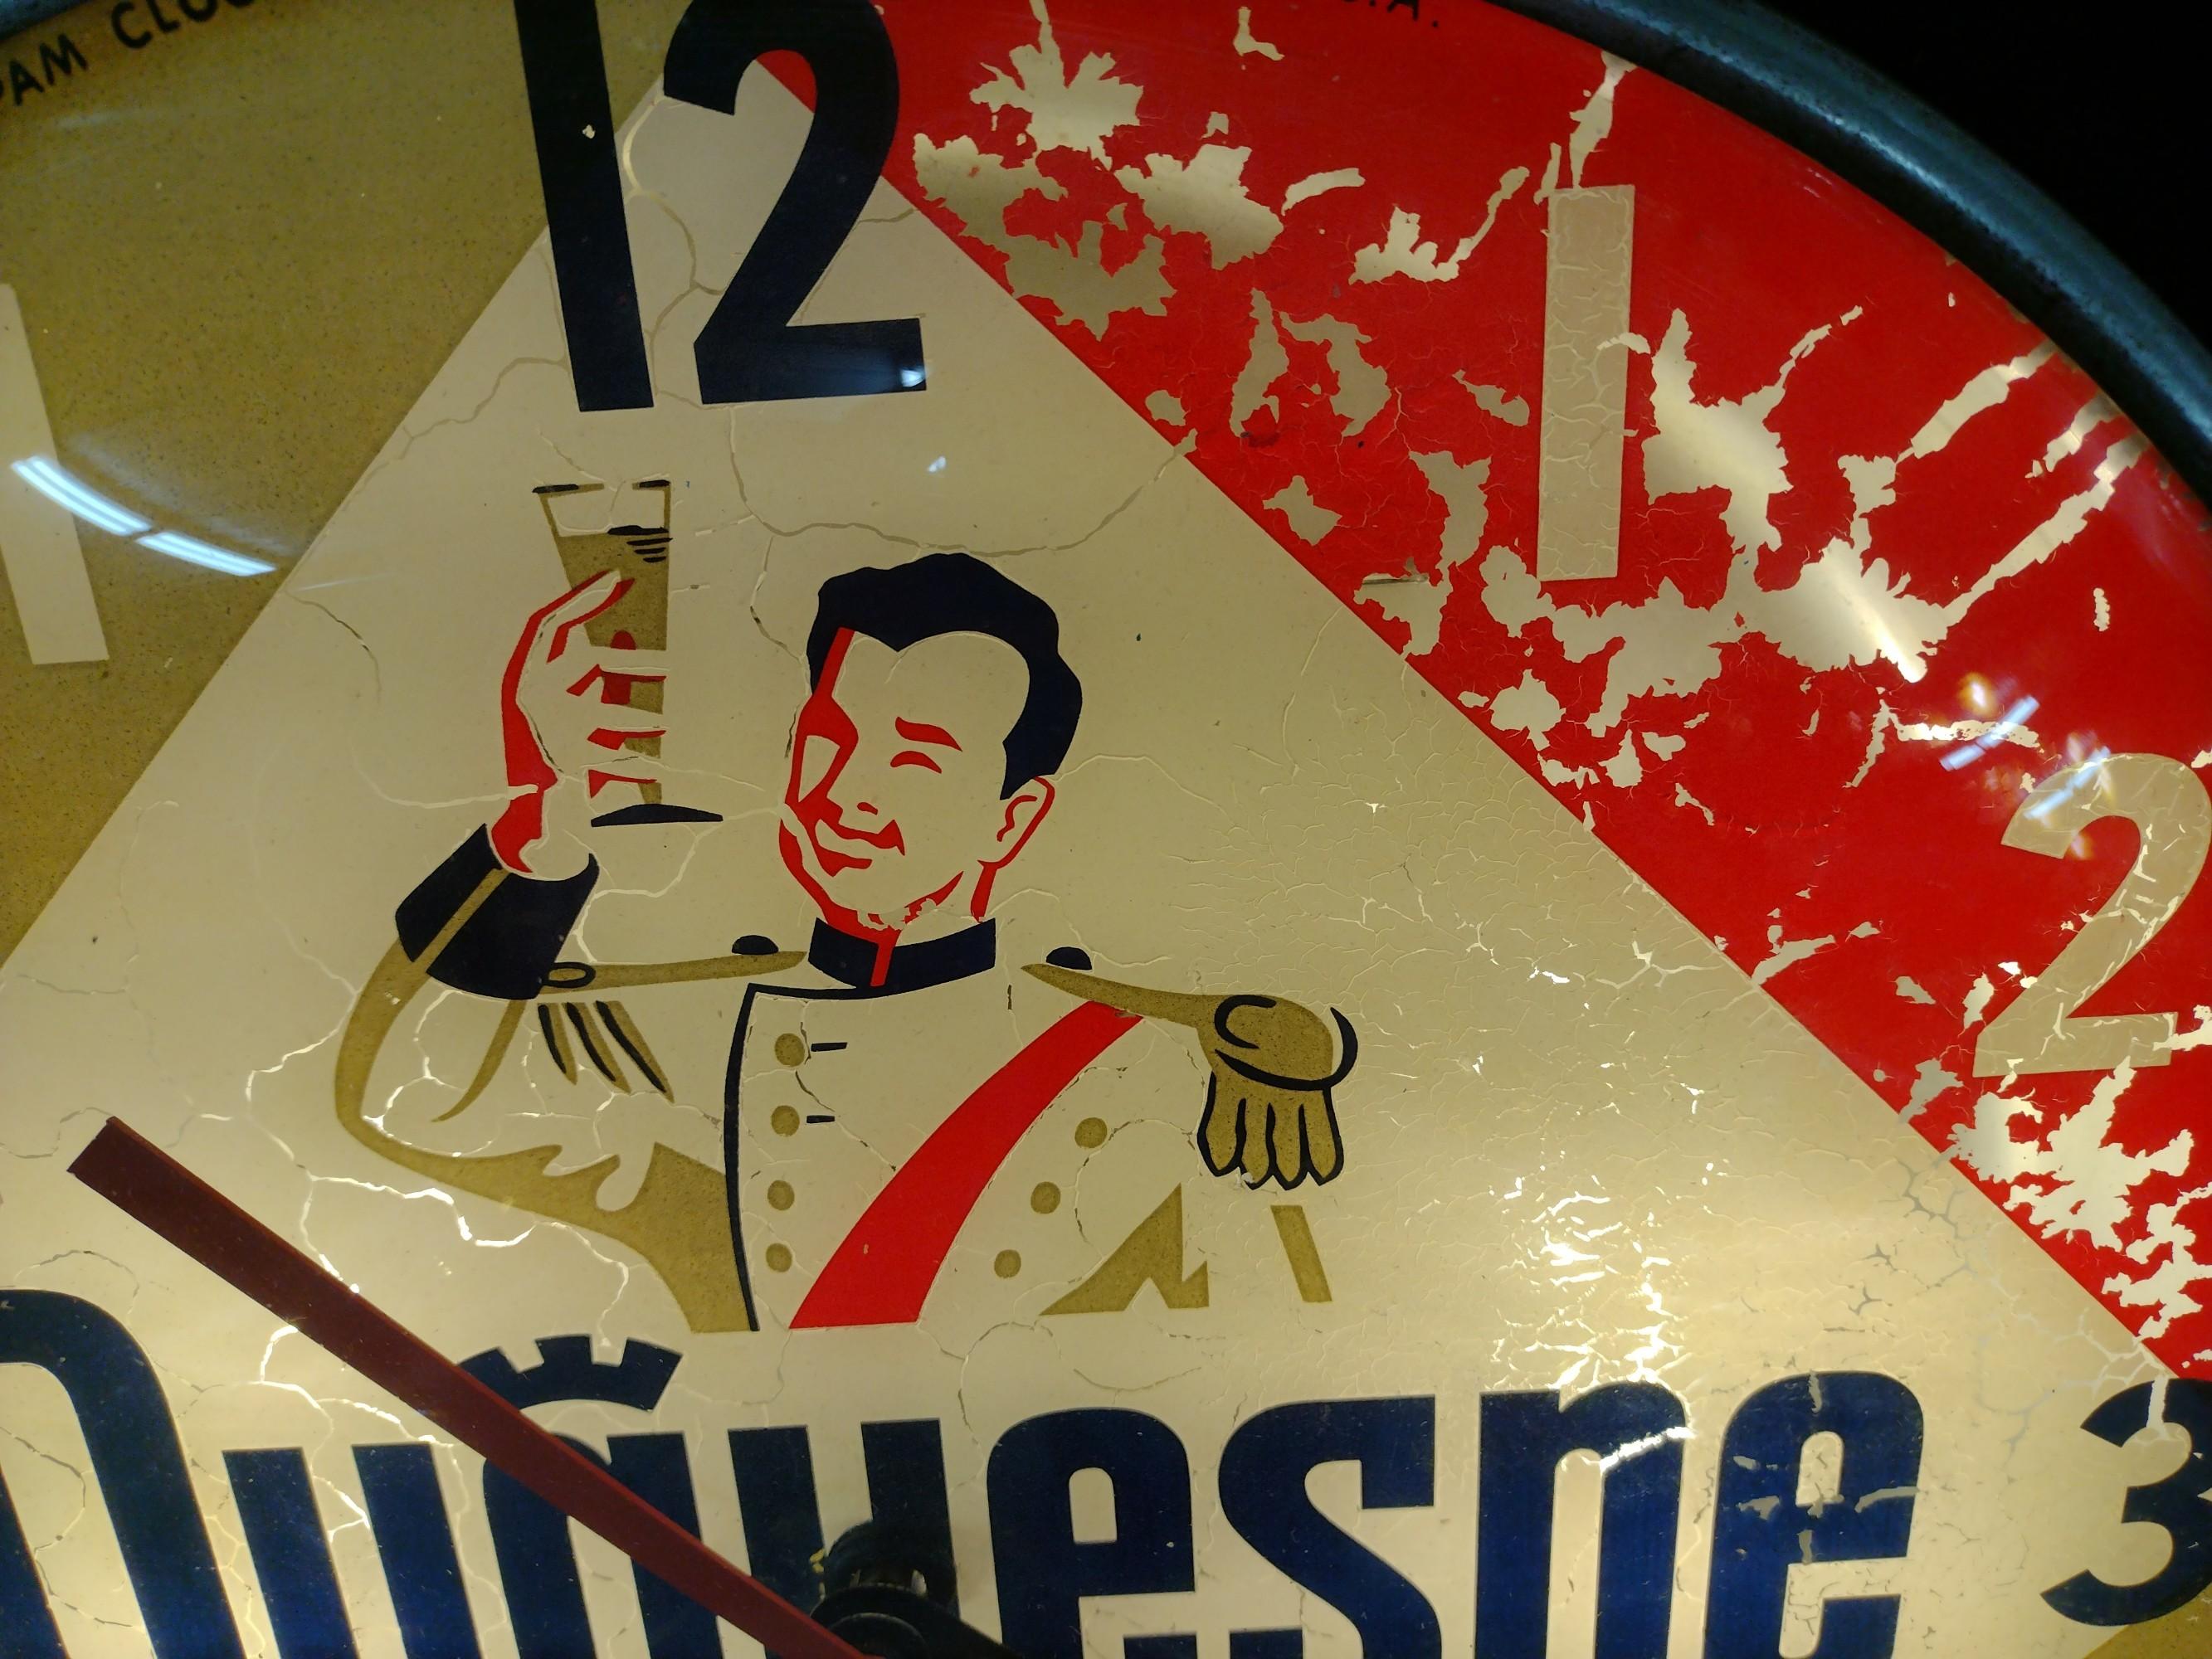 PAM Dusquesne Beer Advertising Clock